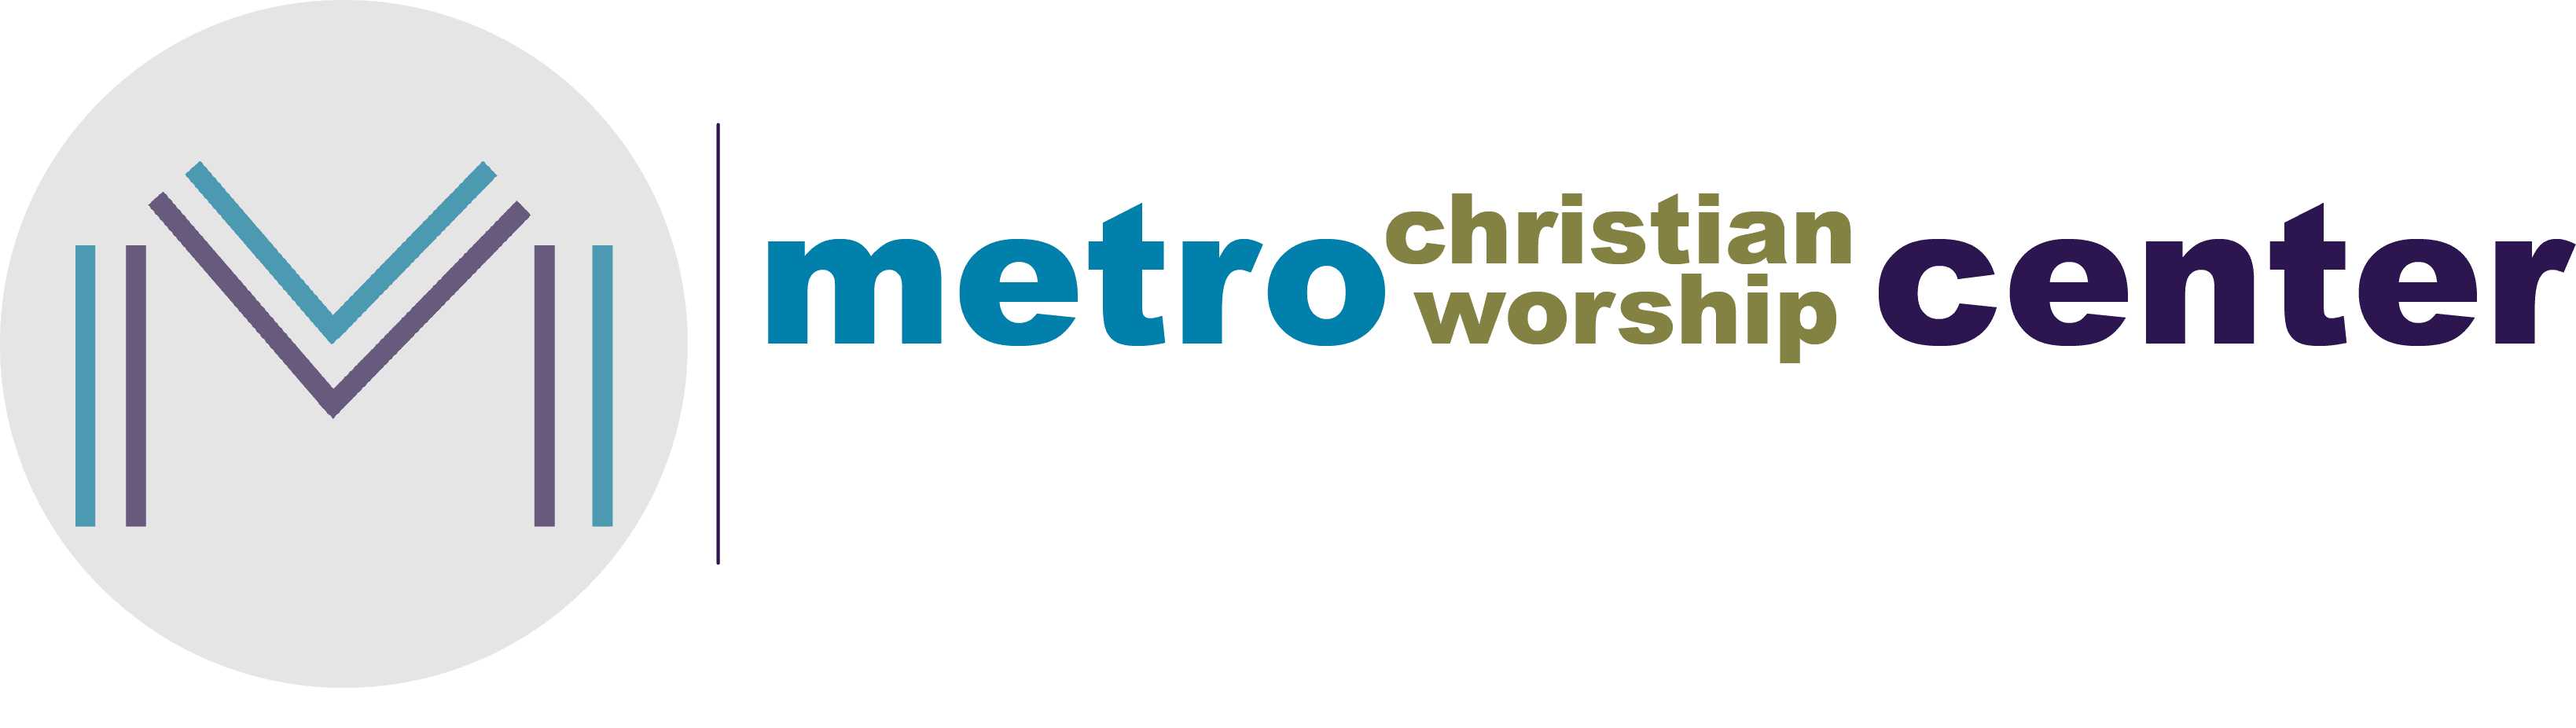 Metro Christian Worship Center